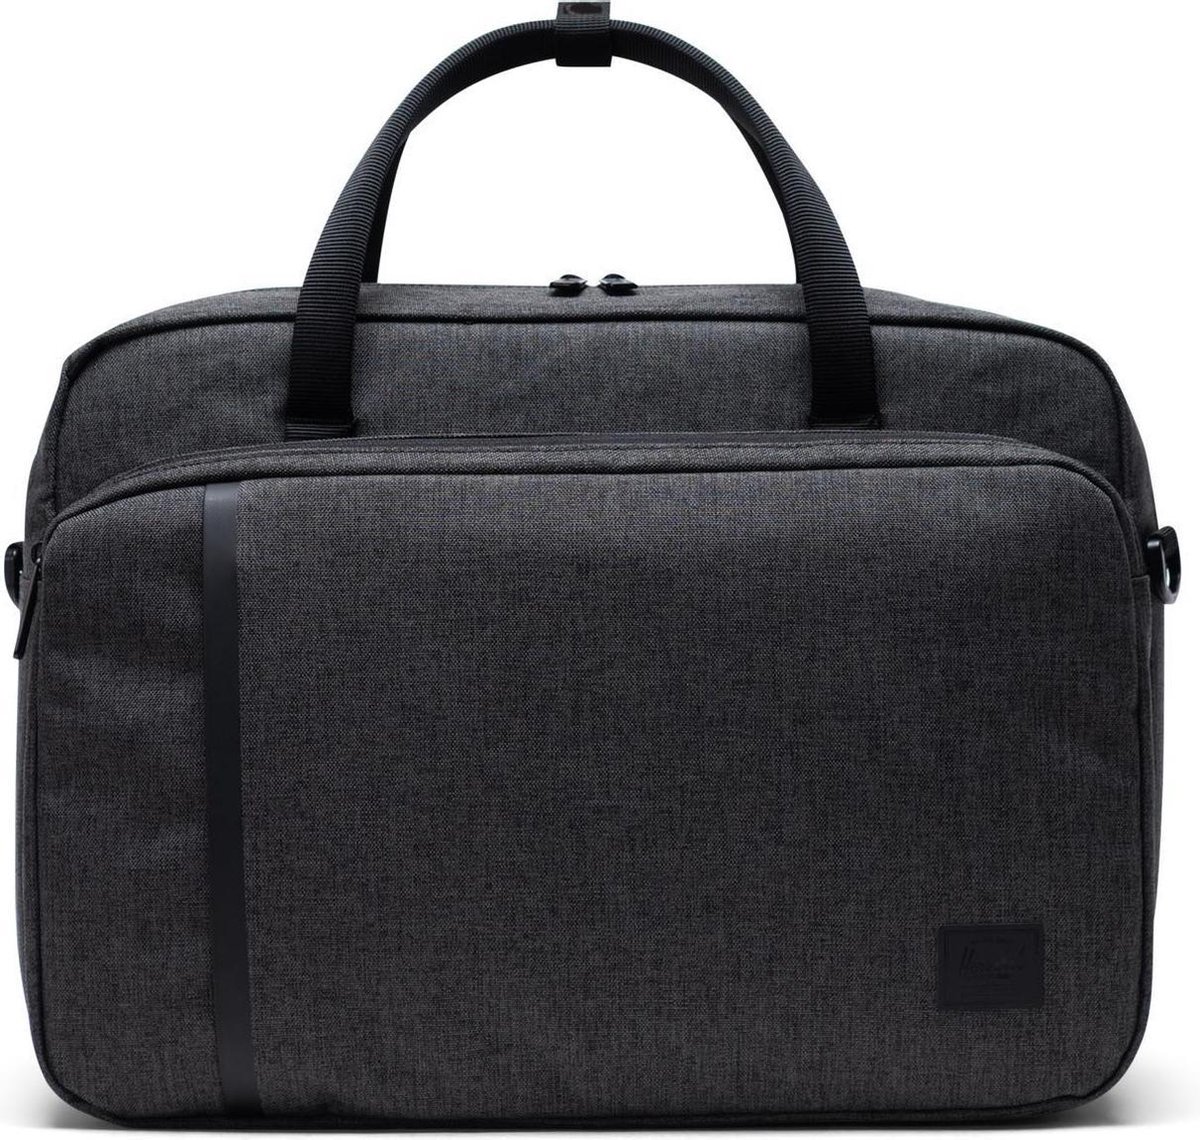 Gibson - Black Crosshatch / Business travel laptoptas met 16